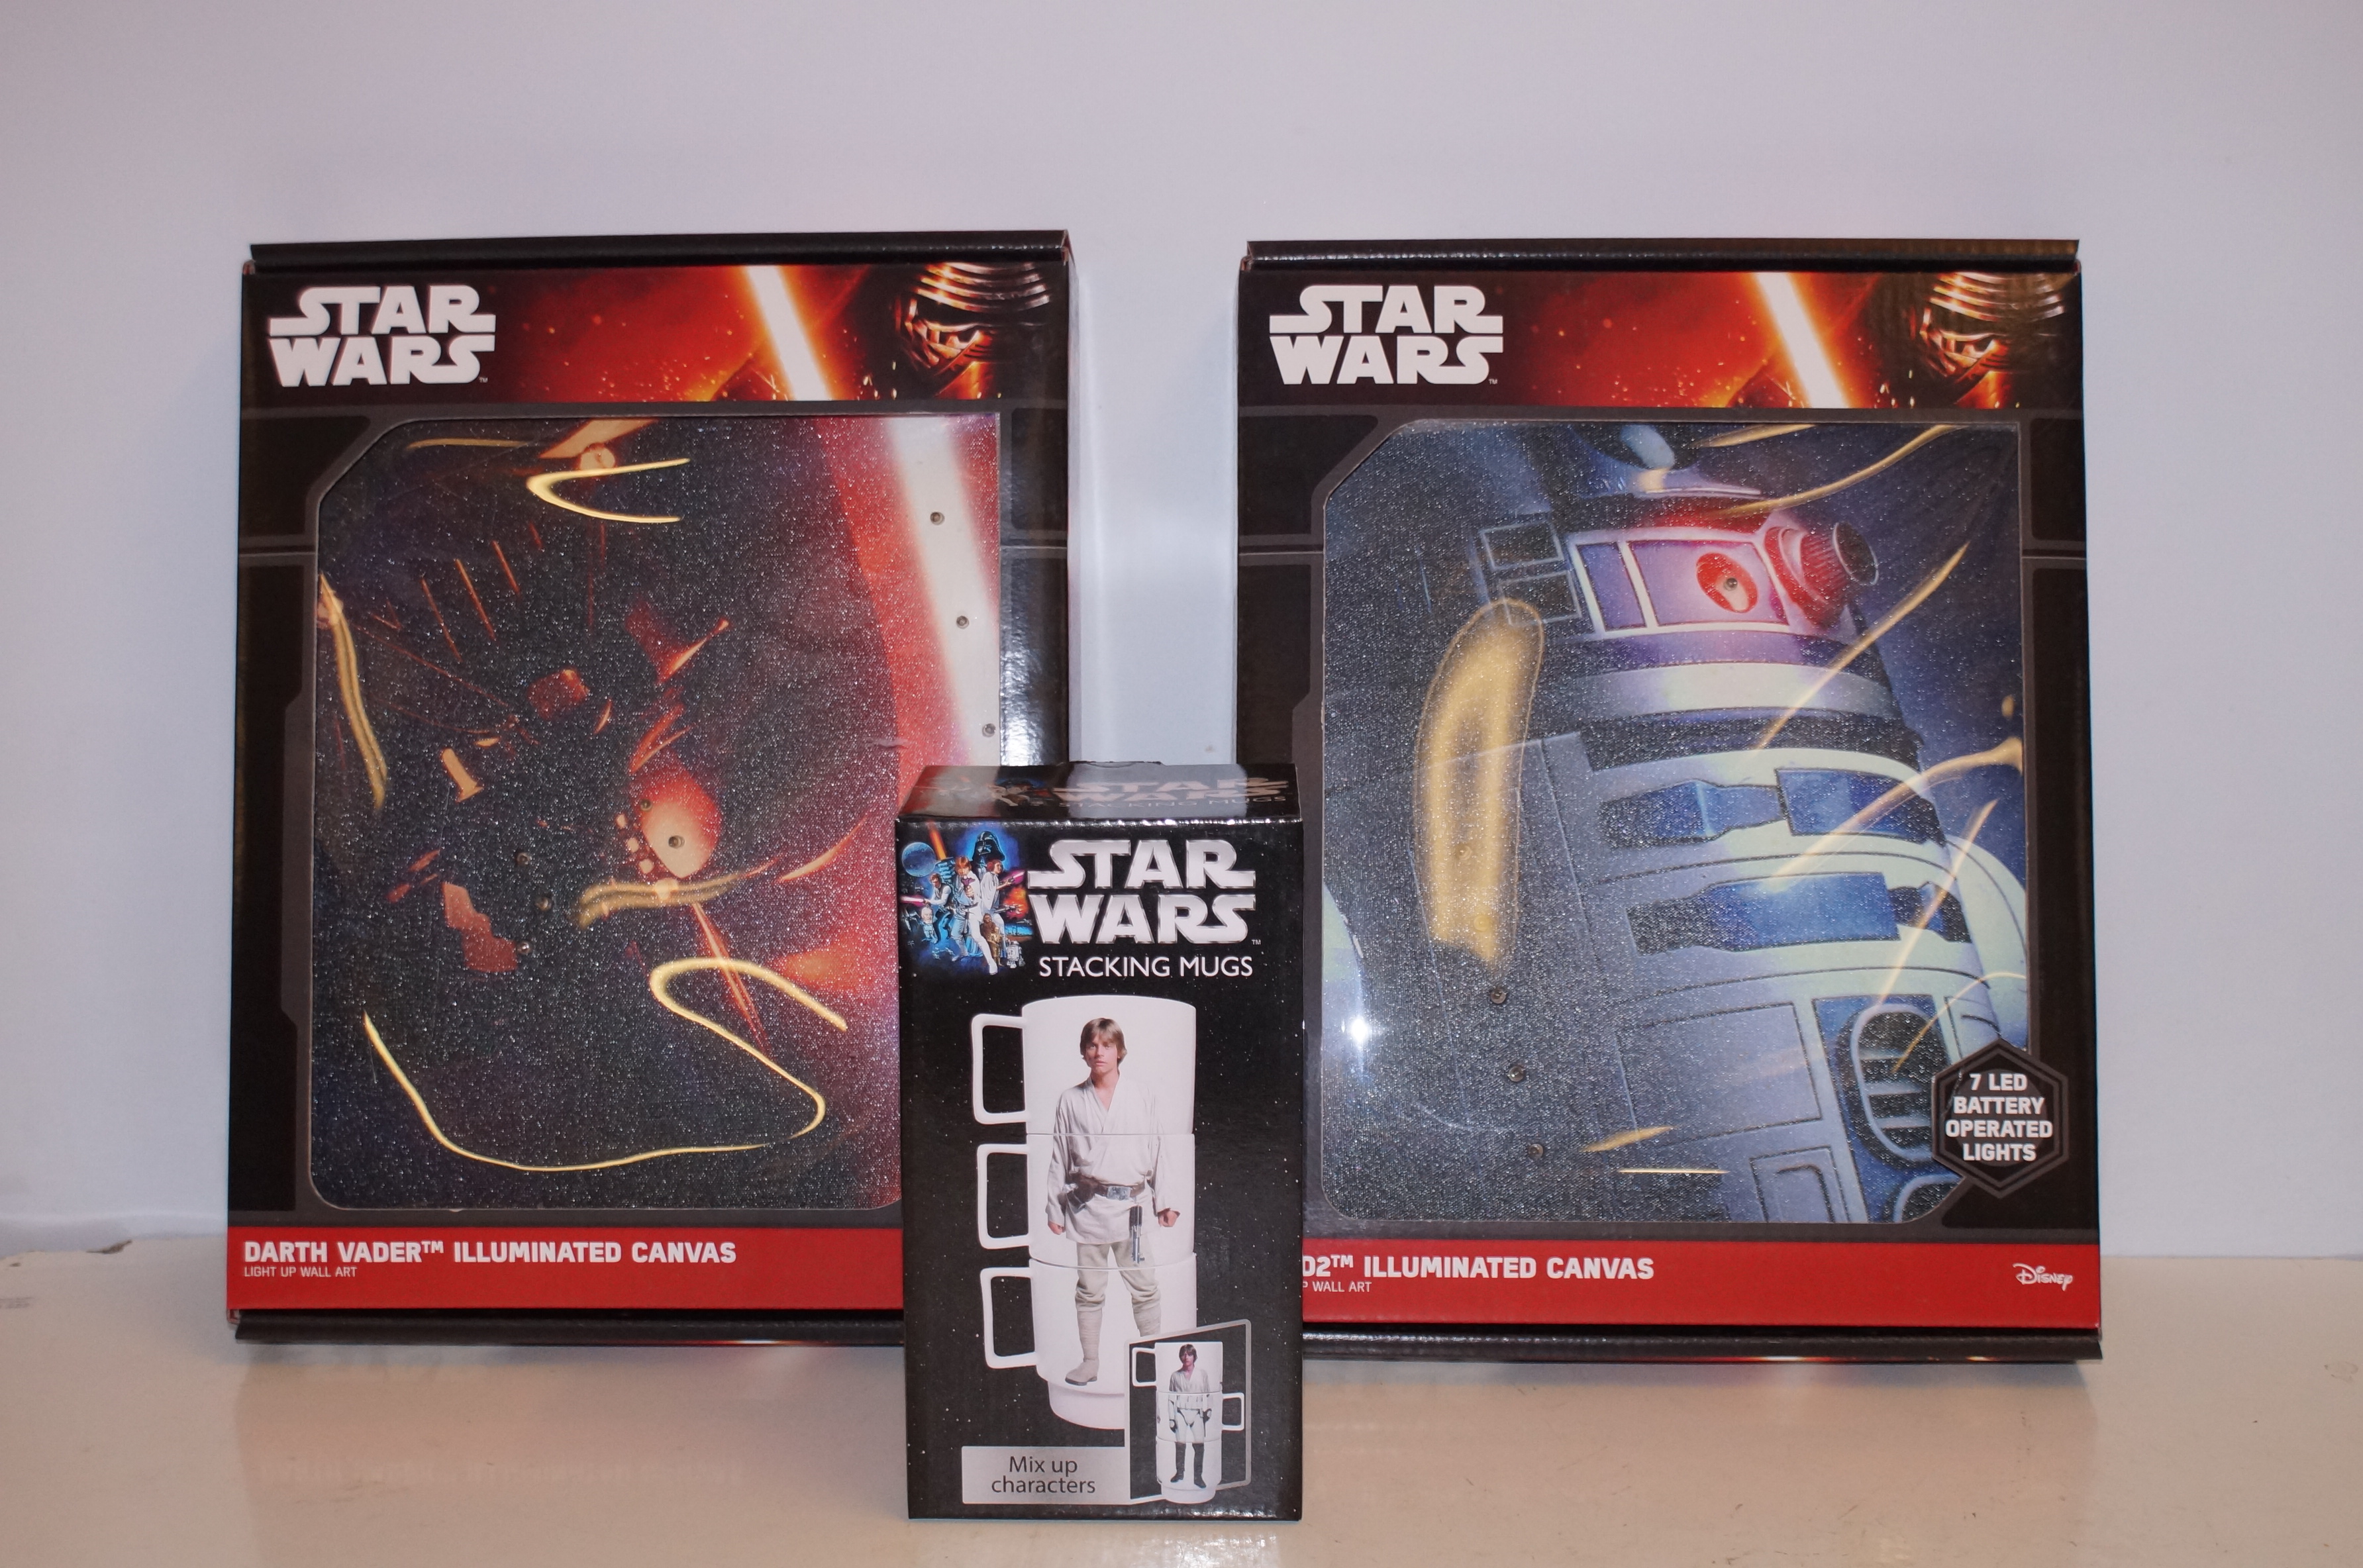 Star Wars illuminated canvas x2 & Stars Wars stack